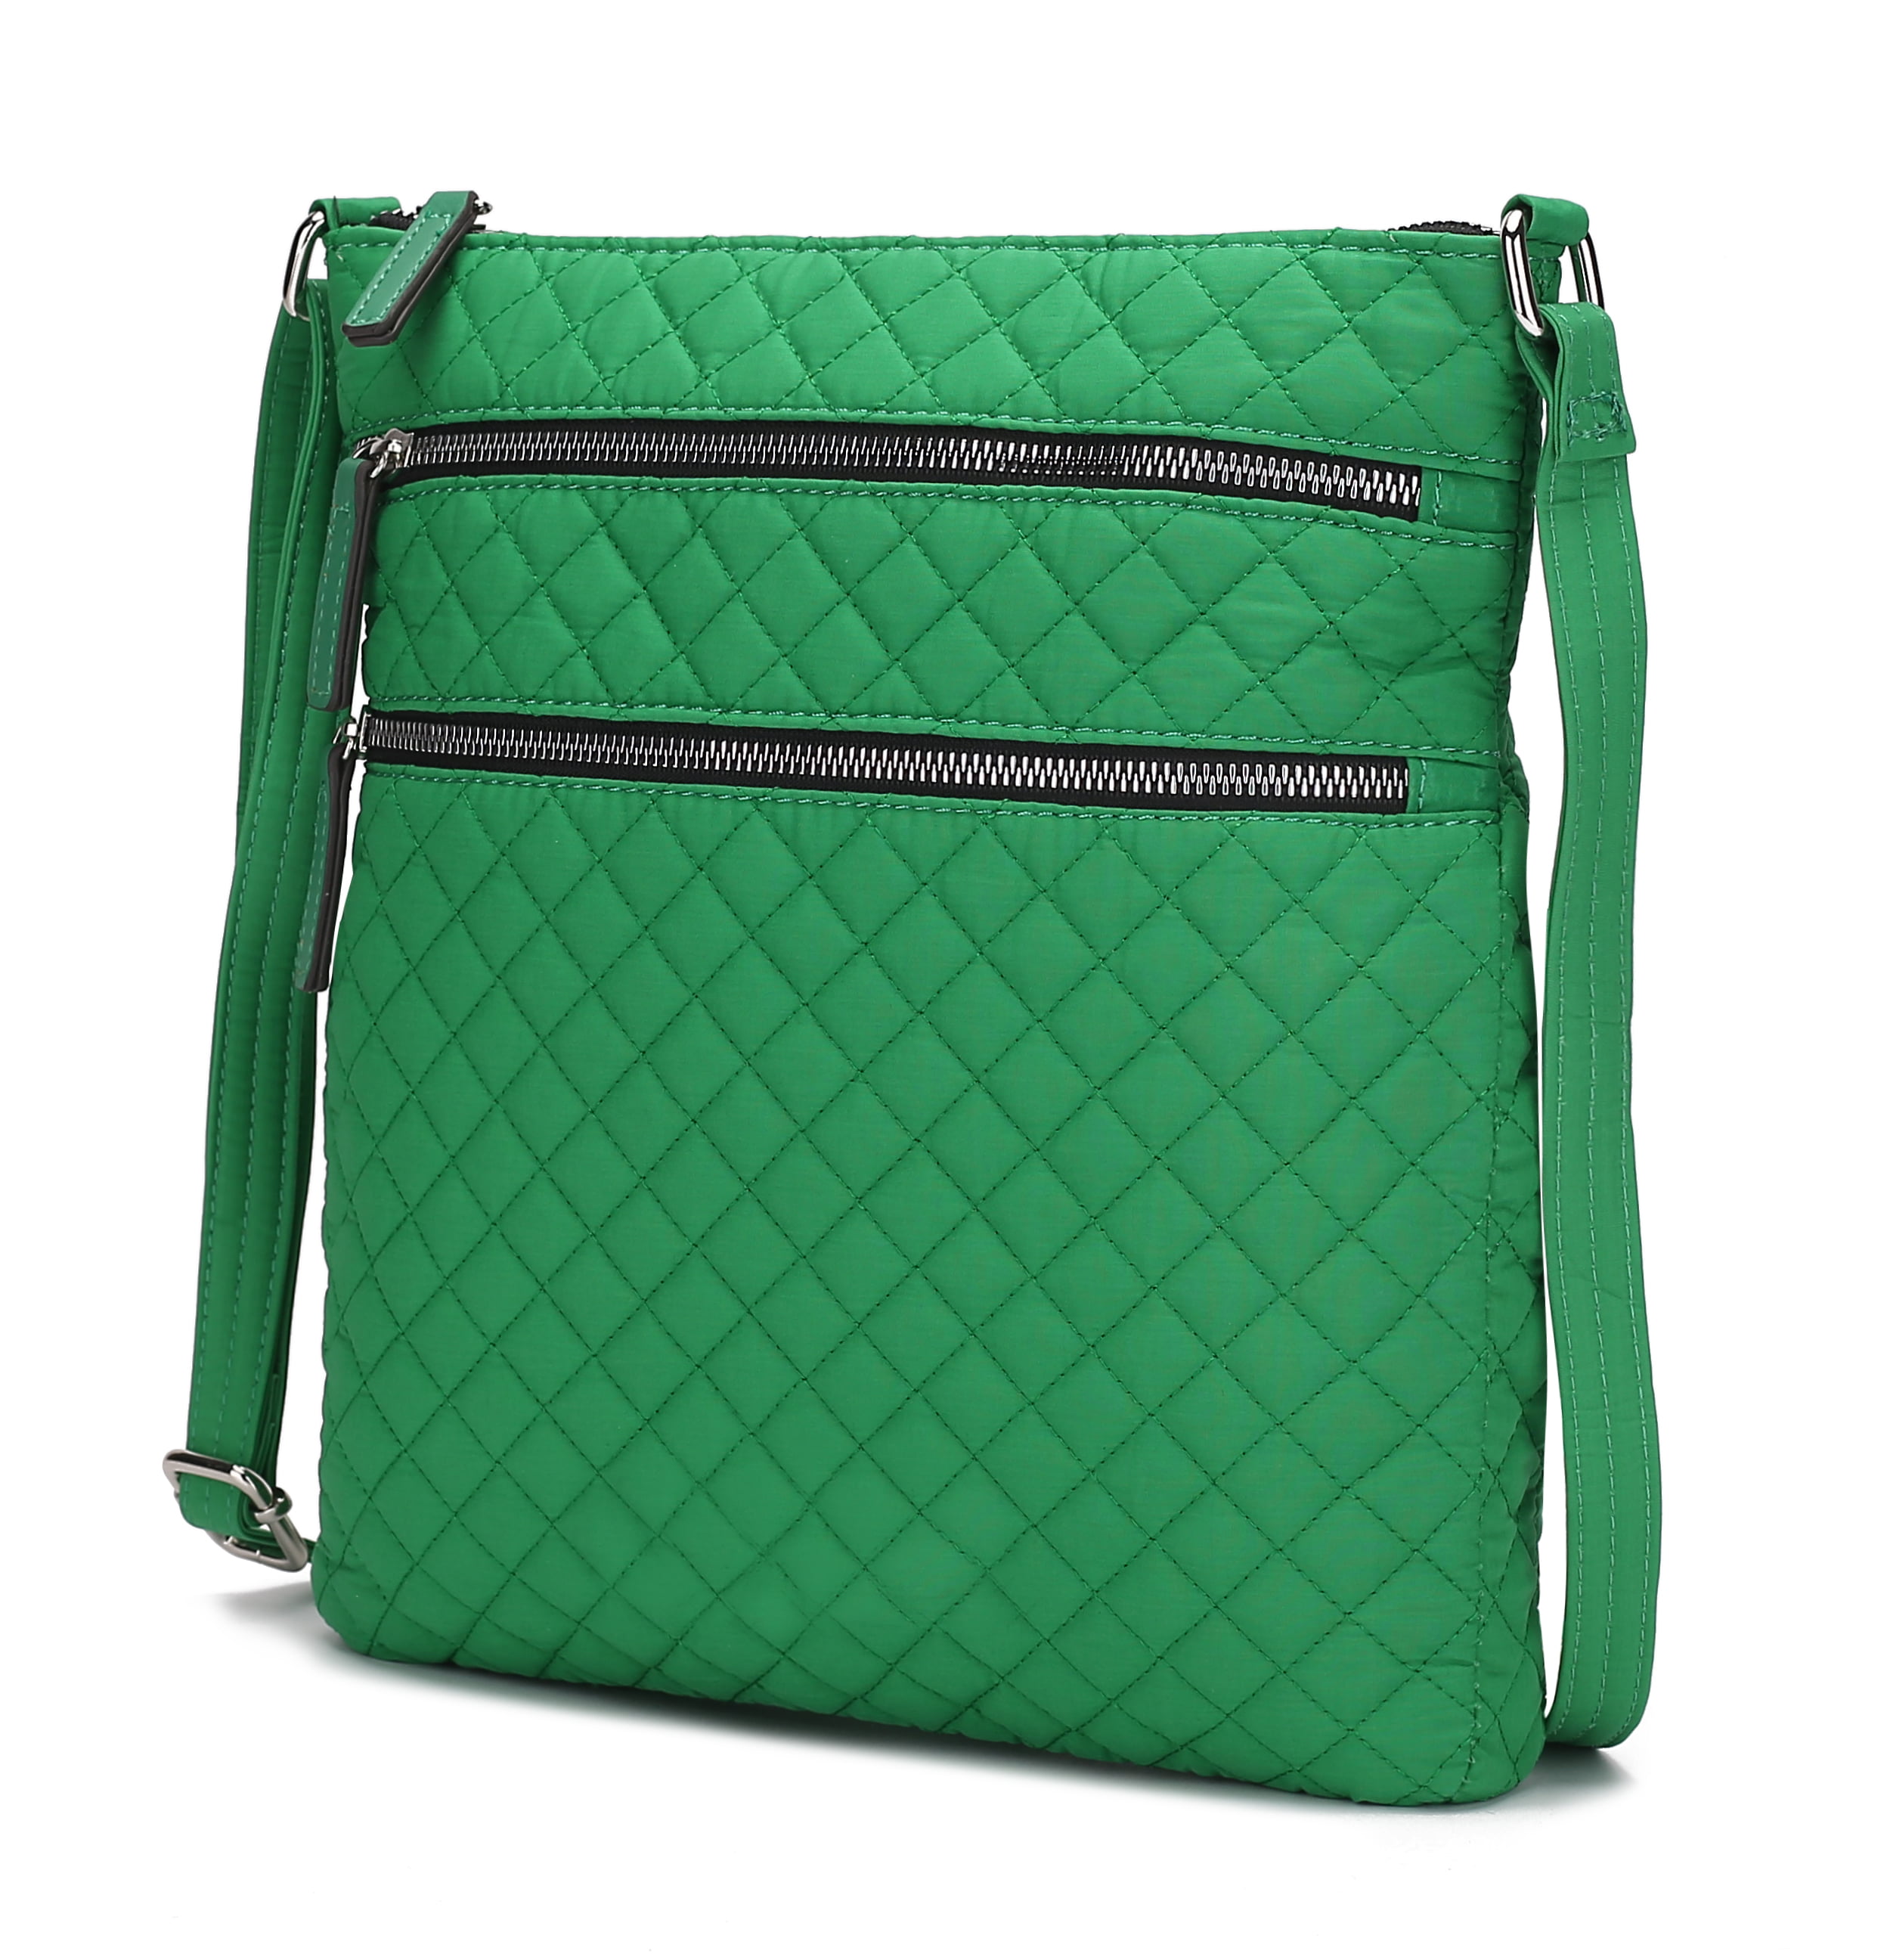 2pc set Shoulder Bag Messenger Cross-body Handbag Kids Mini Purse US seller 